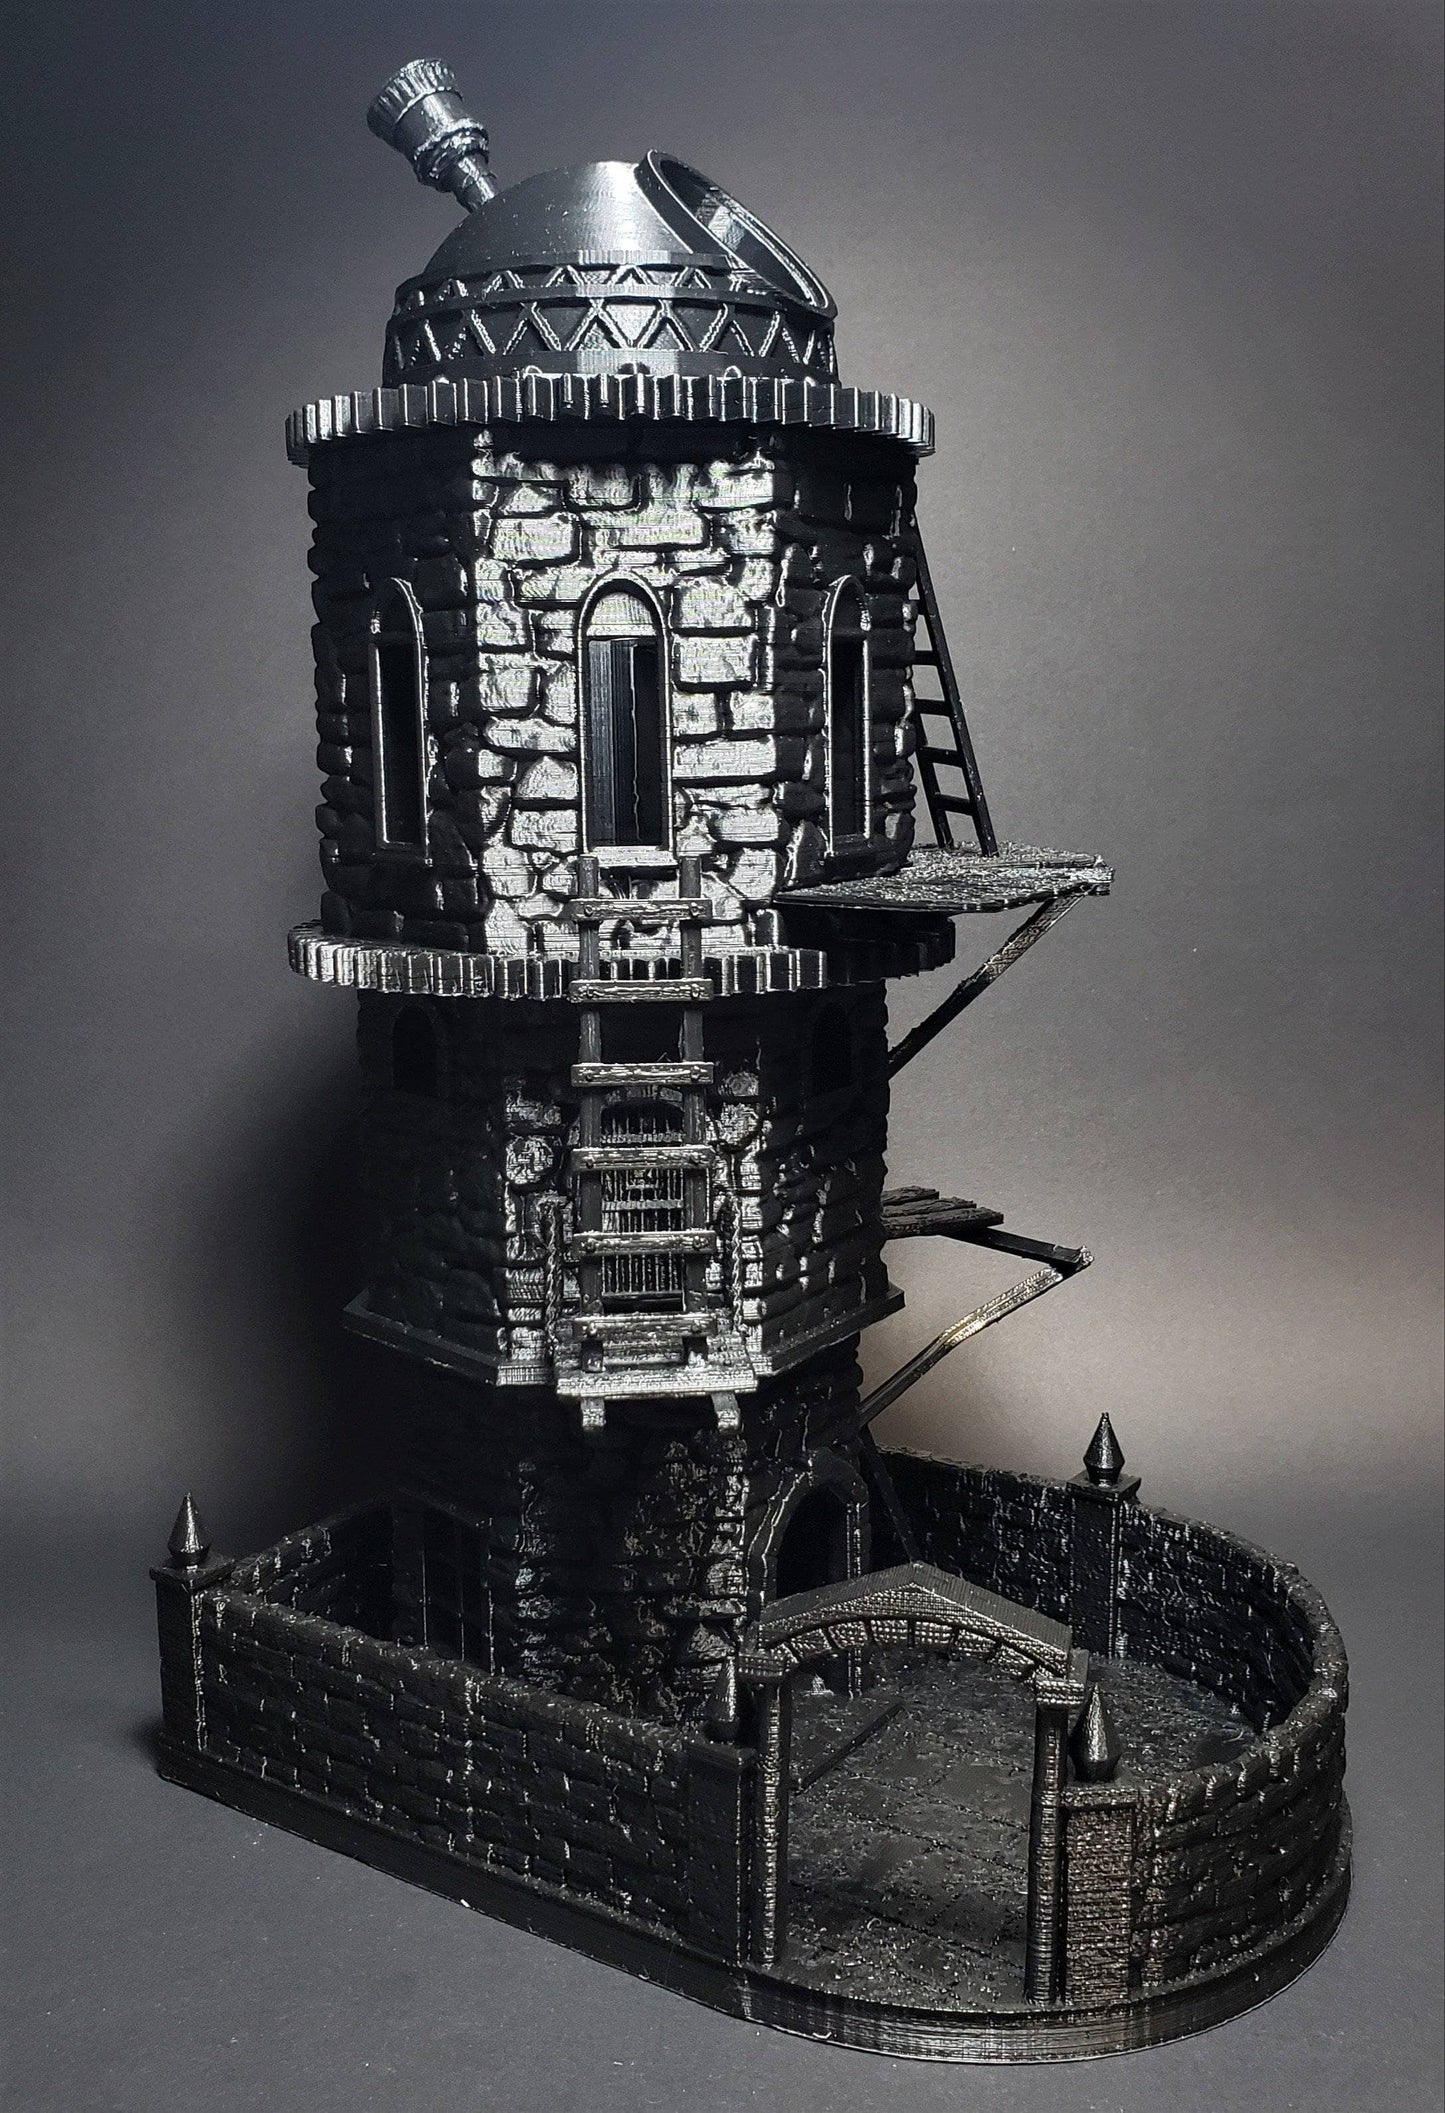 The Observatorium-Austen's Dice Towers-Dice,Dice Tower